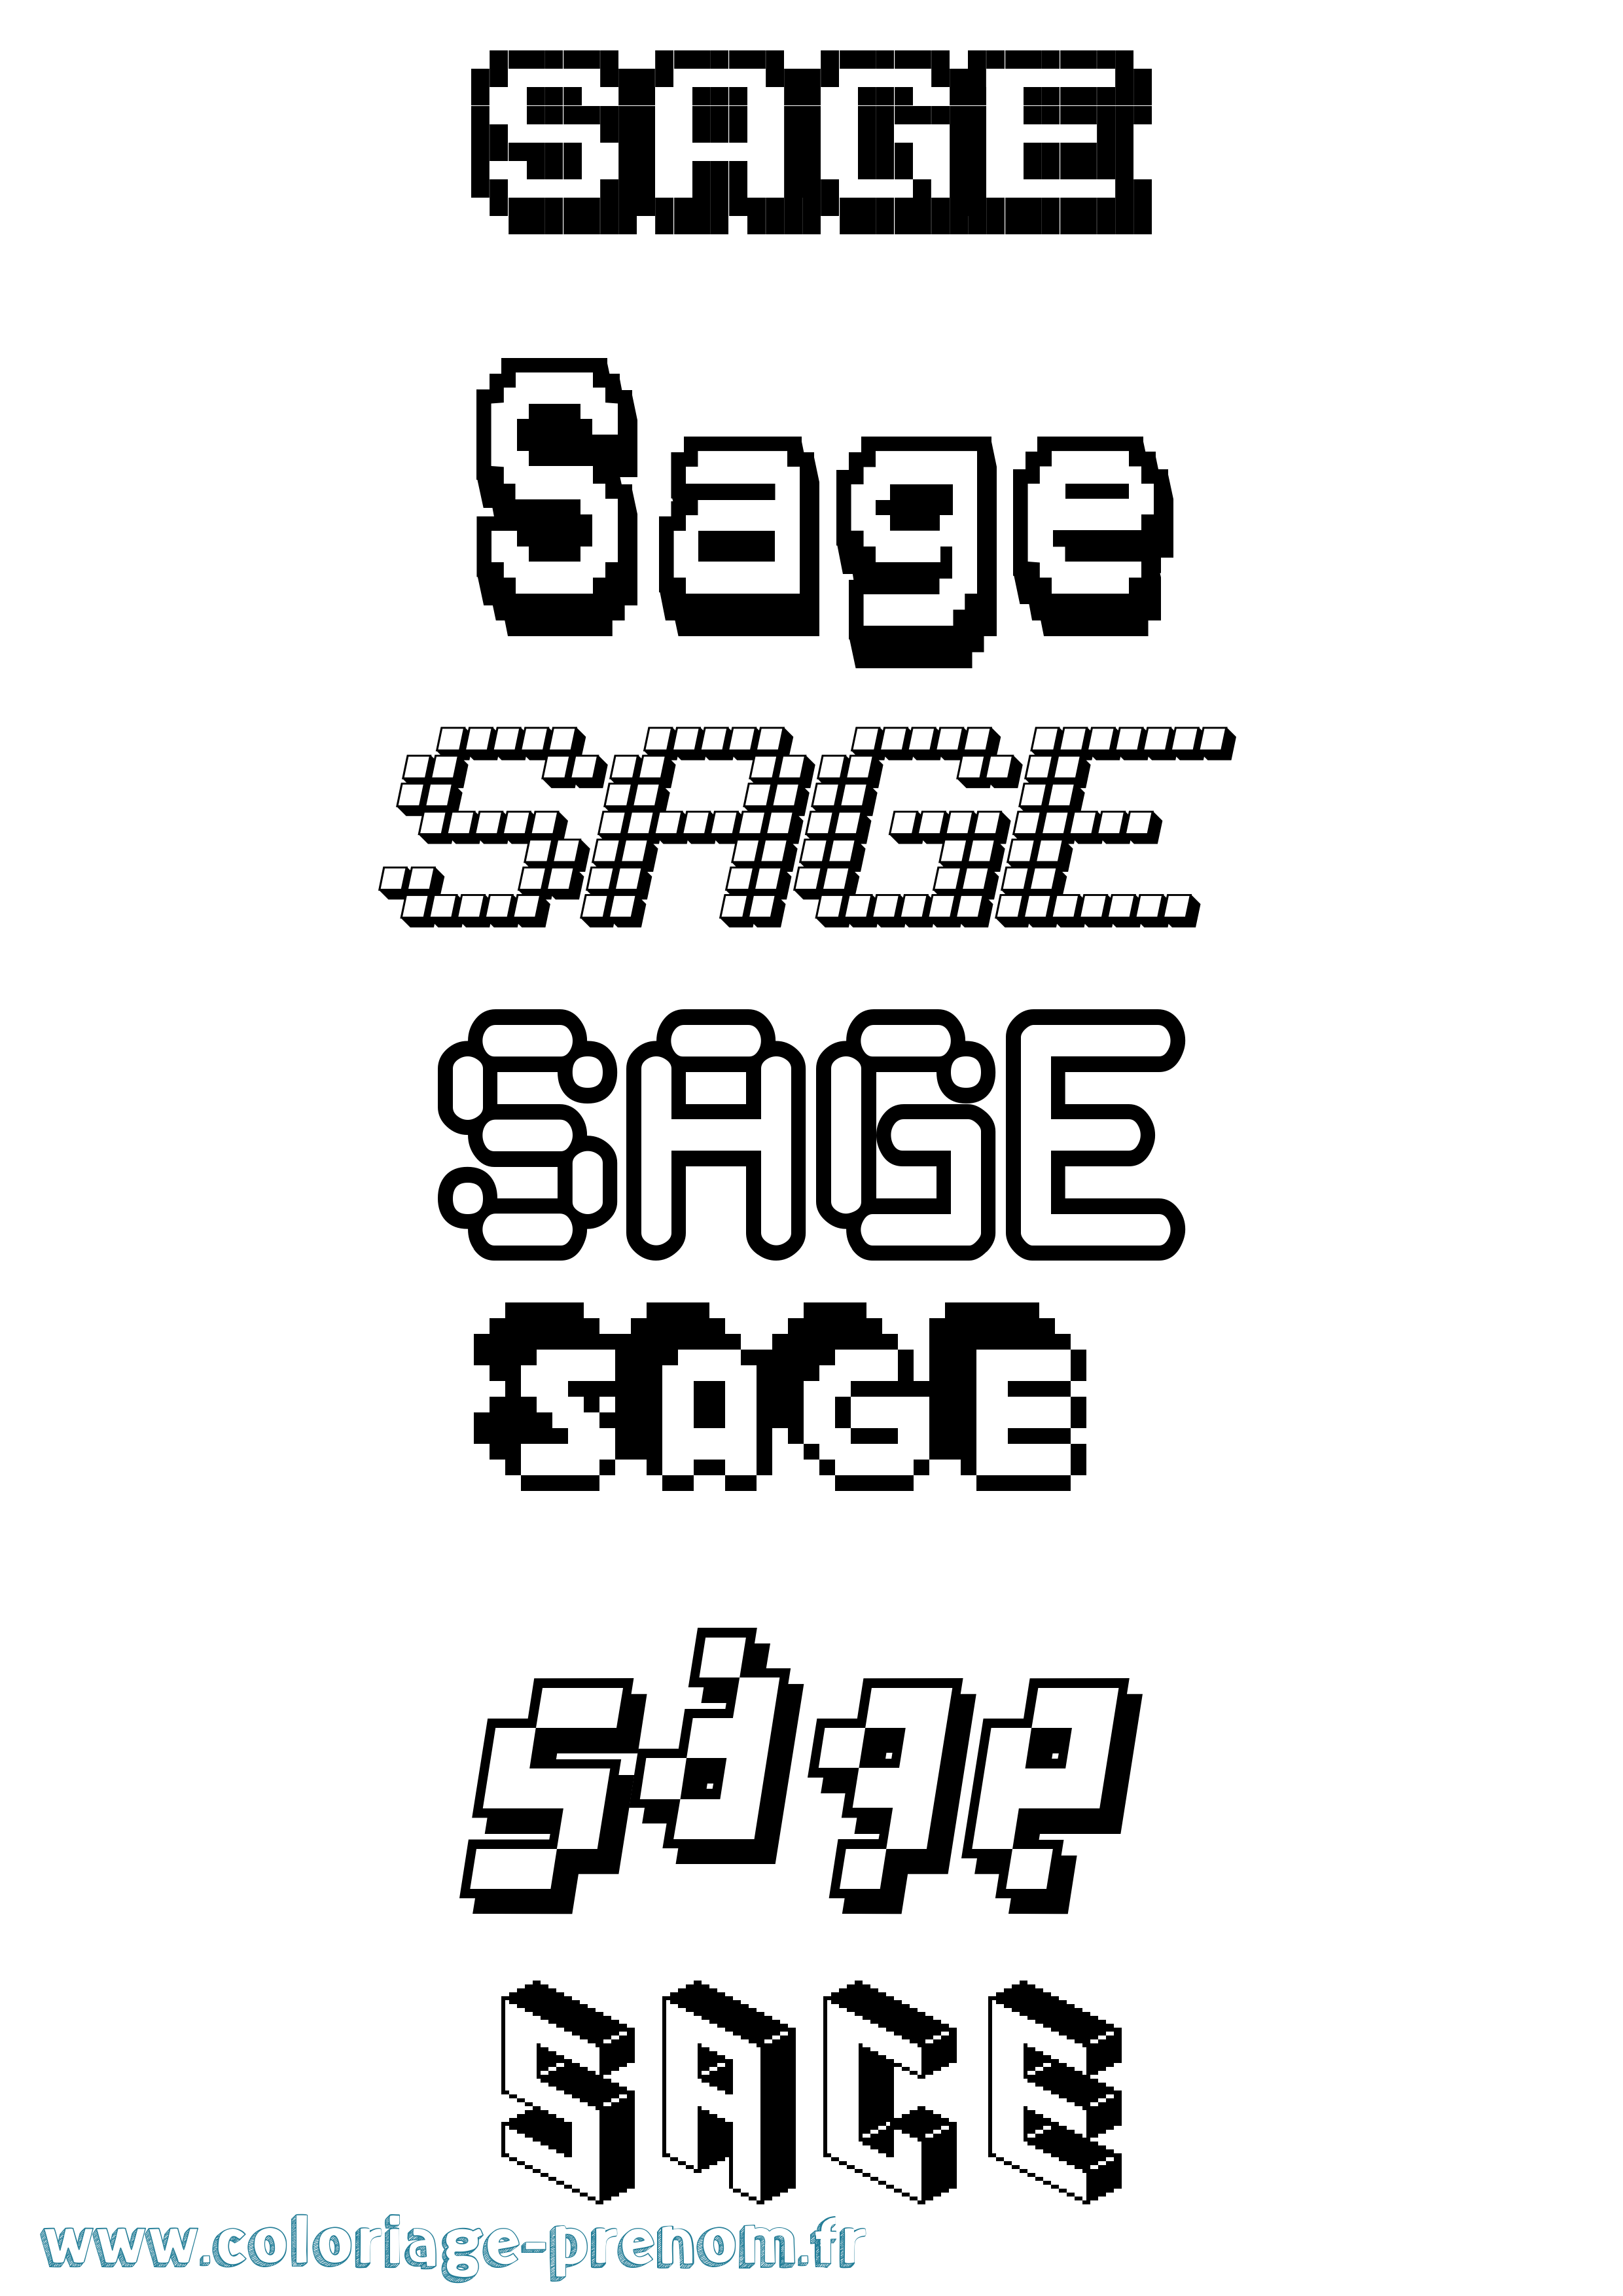 Coloriage prénom Sage Pixel